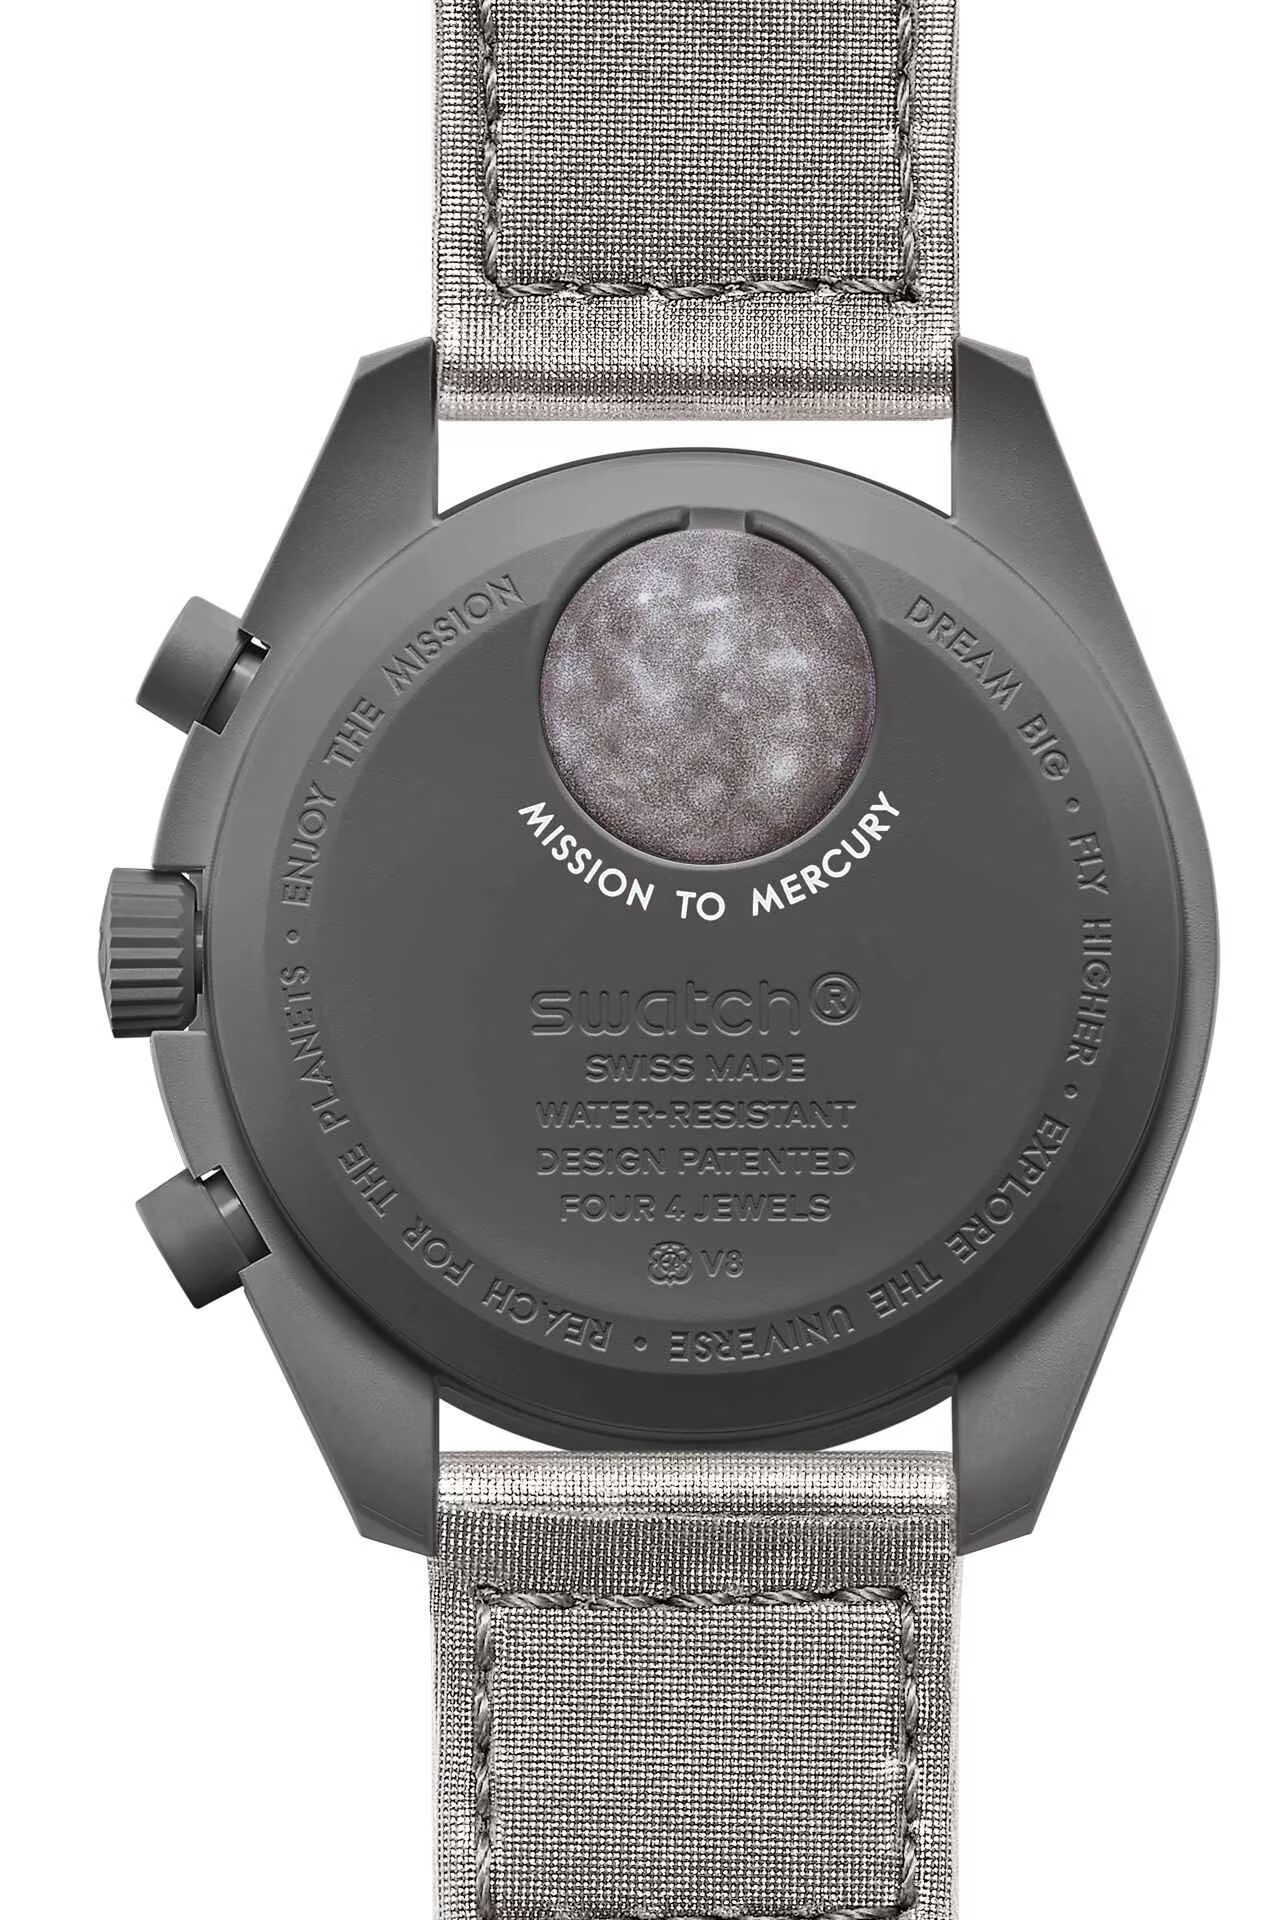 Moonswatch Mission to Mercury Bioceramic Watch - Gray 